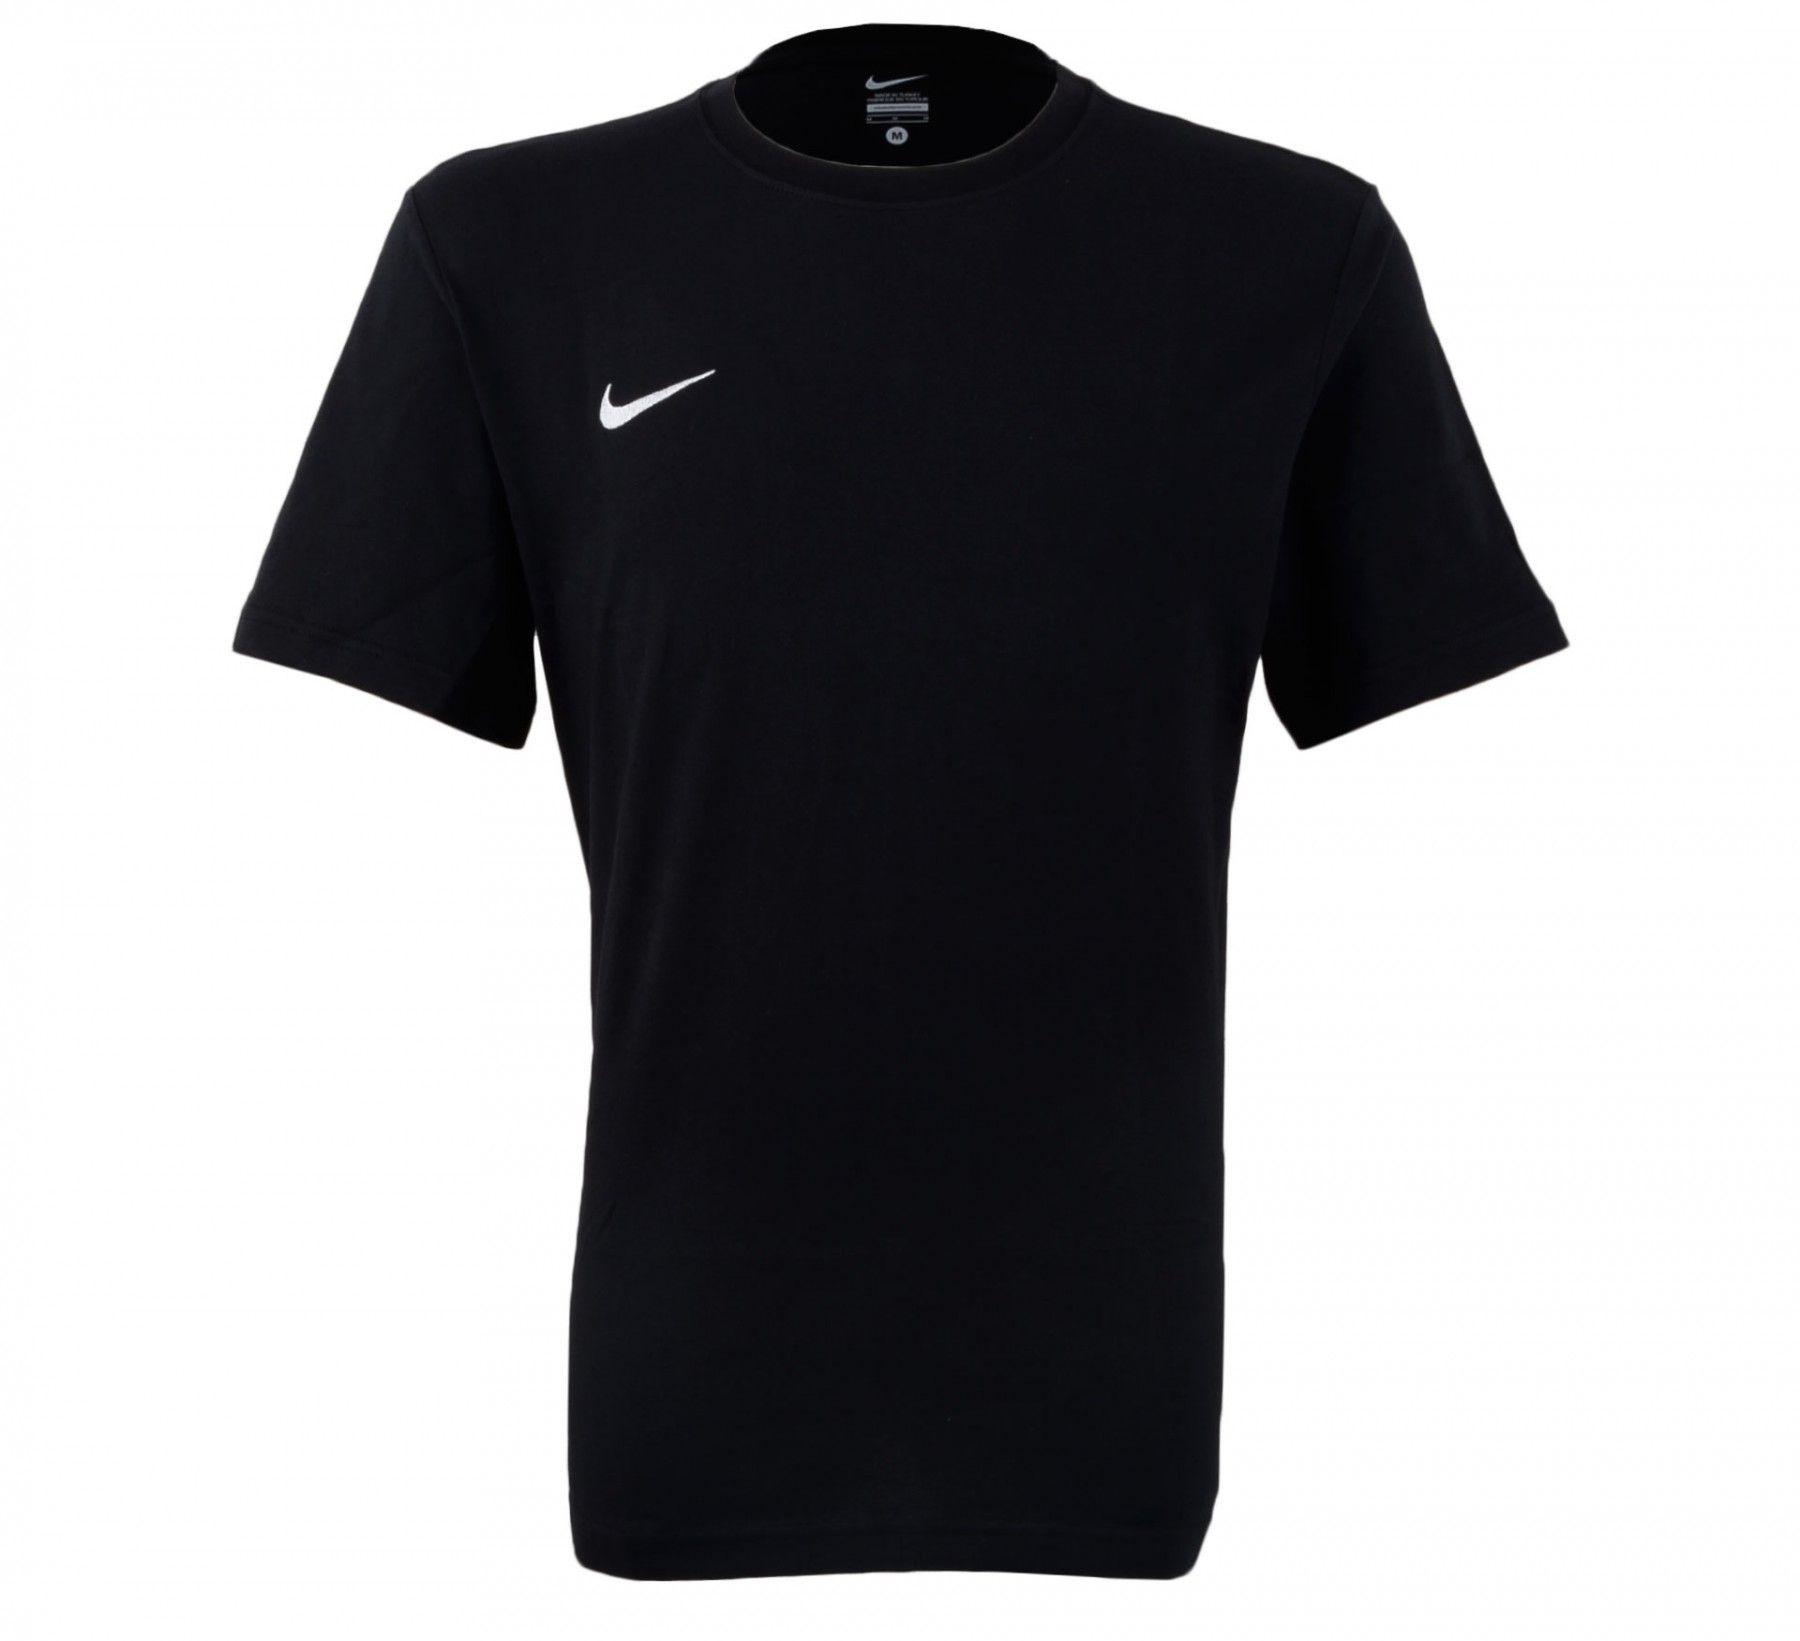 Men's Express Clothing Logo - Nike Express Core T-Shirt Mens - Shirts - Clothing - Fitness ...